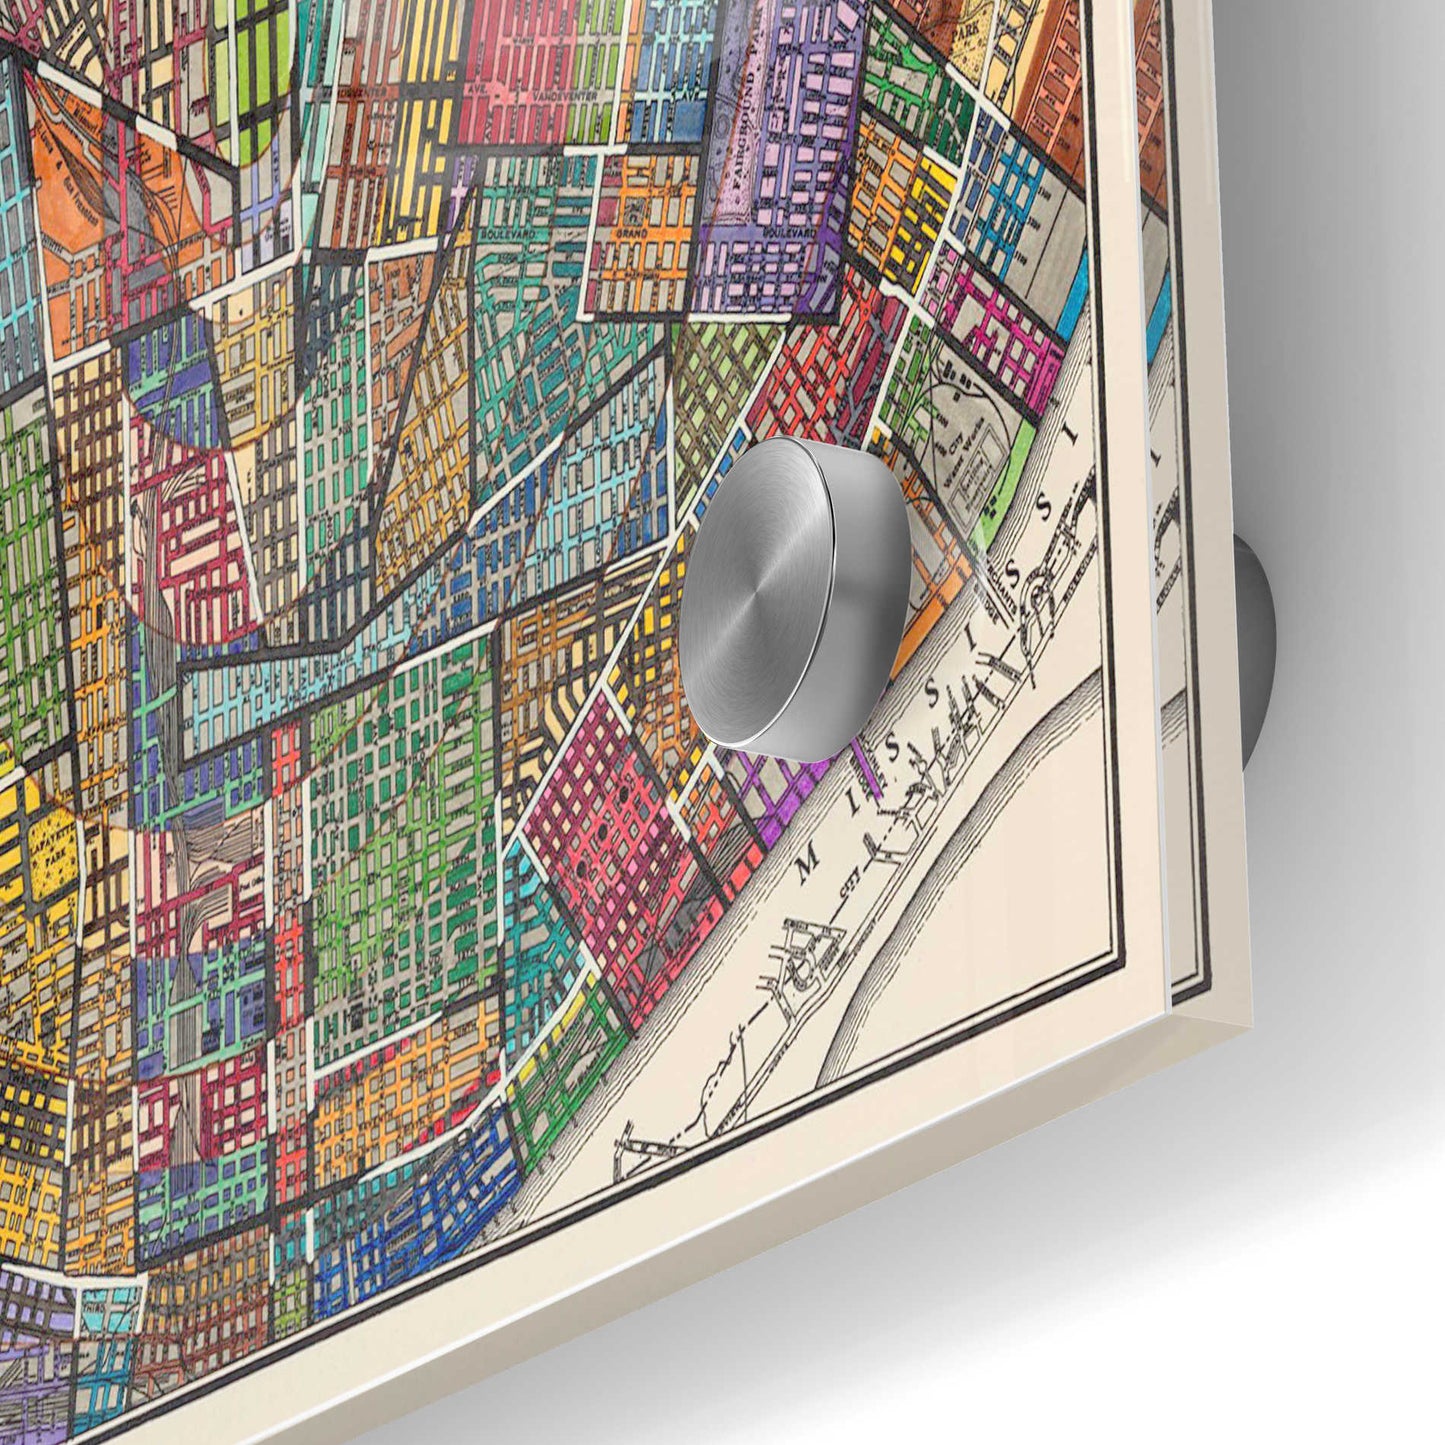 Epic Art 'Modern Map of St. Louis' by Nikki Galapon Acrylic Glass Wall Art,24x36